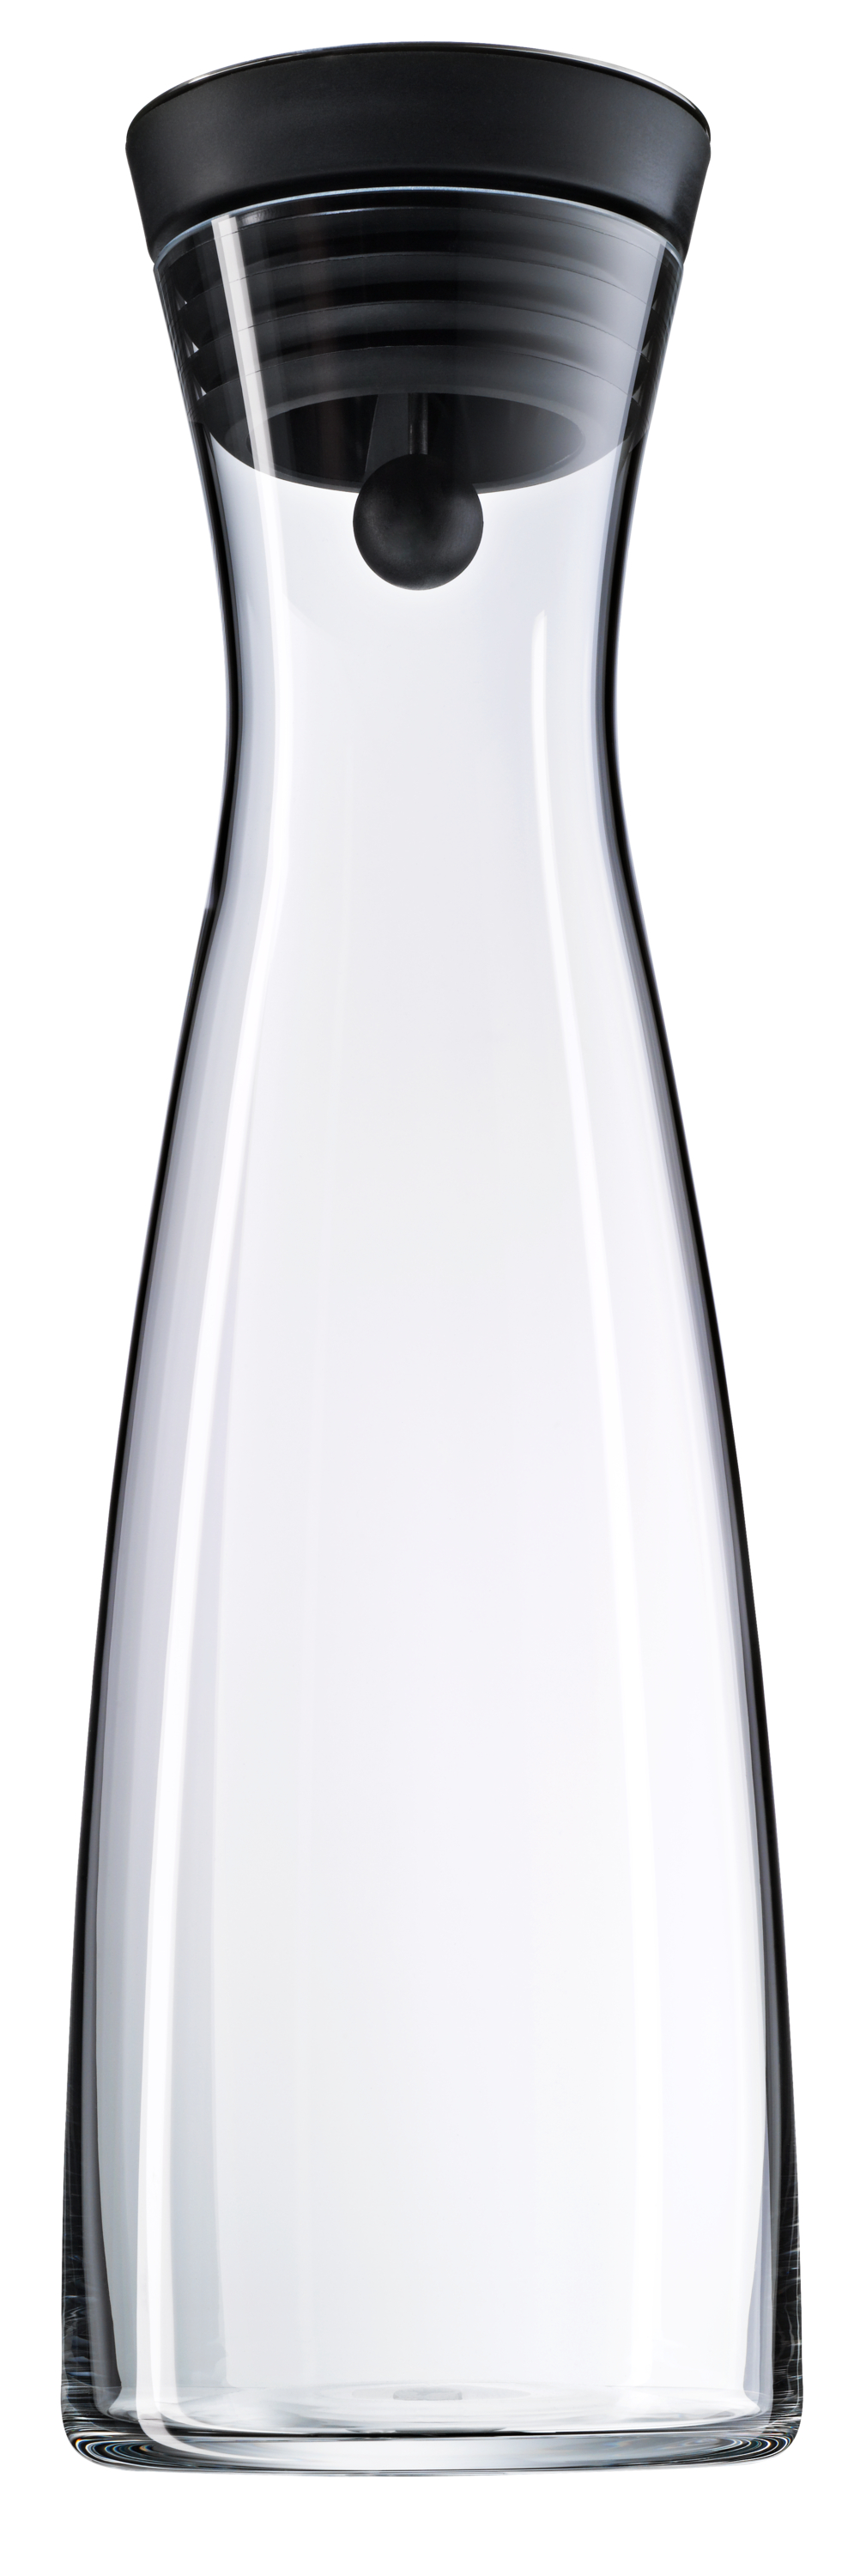 WMF Basic Wasserkaraffe, 1,5 l, Schwarz